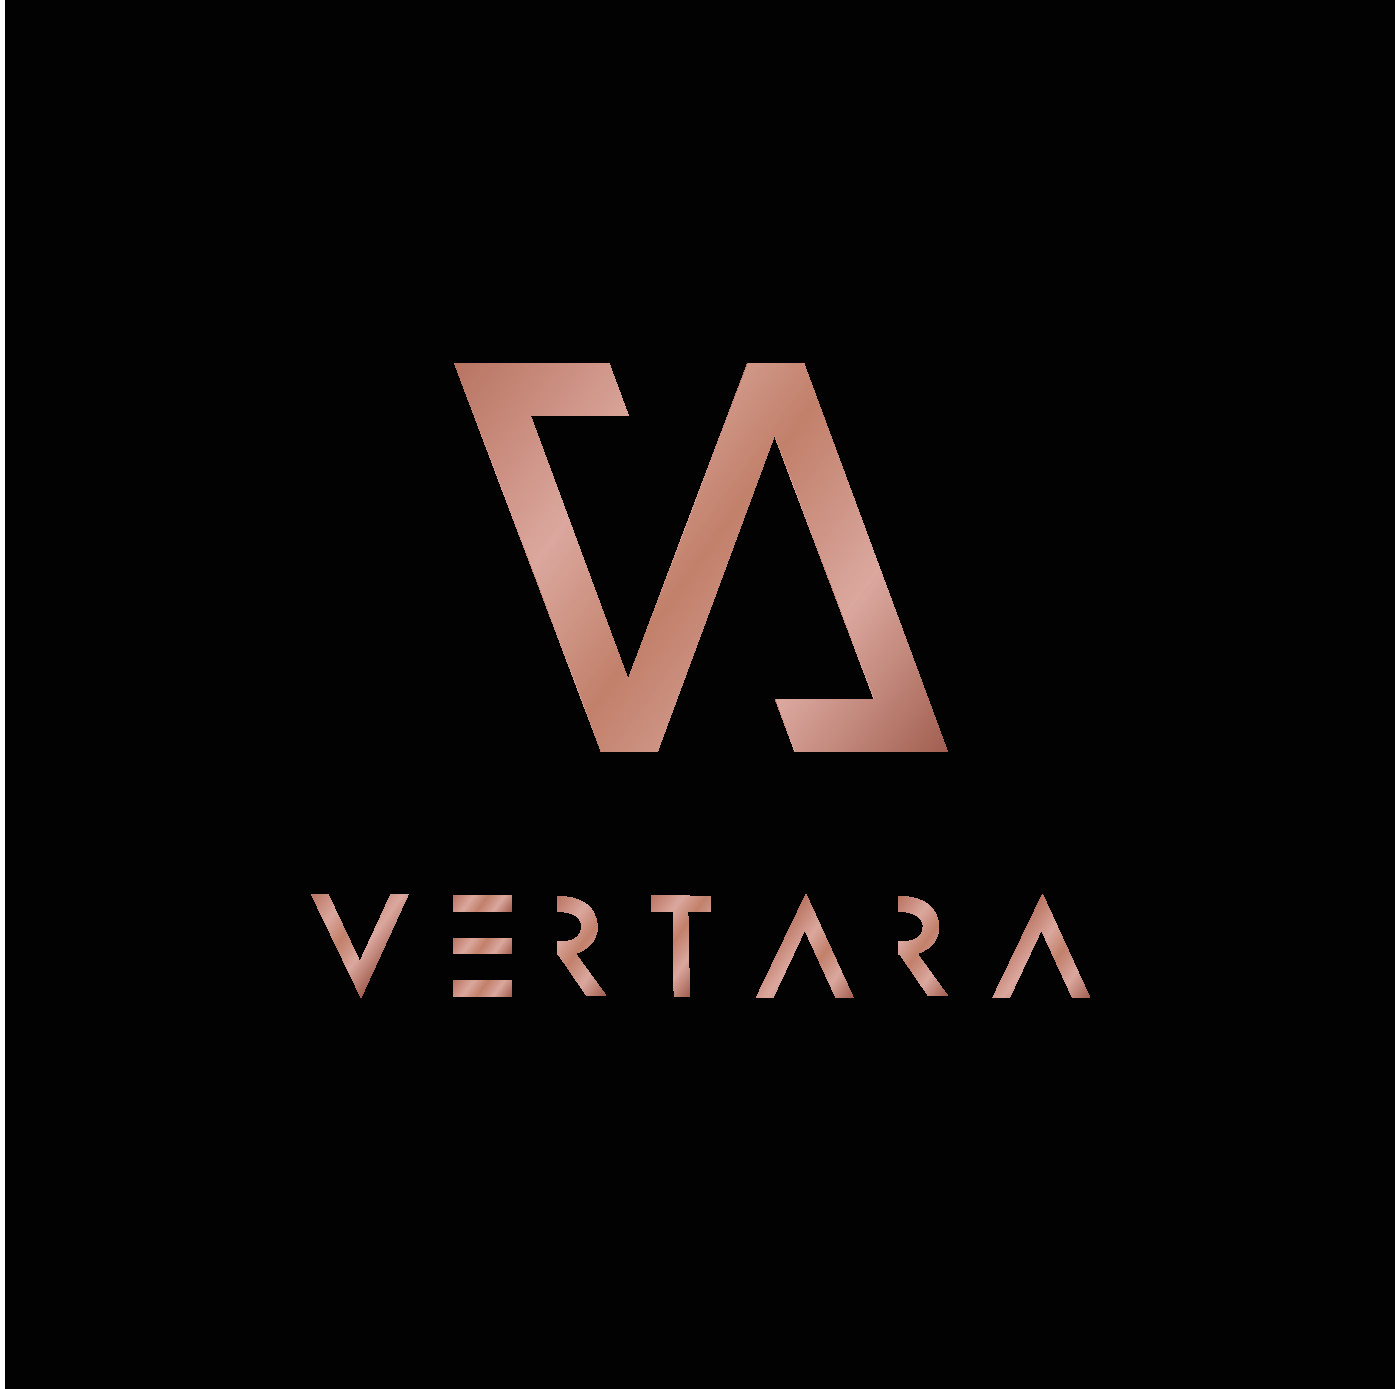 “Vertara” is the trademark of Vertara.